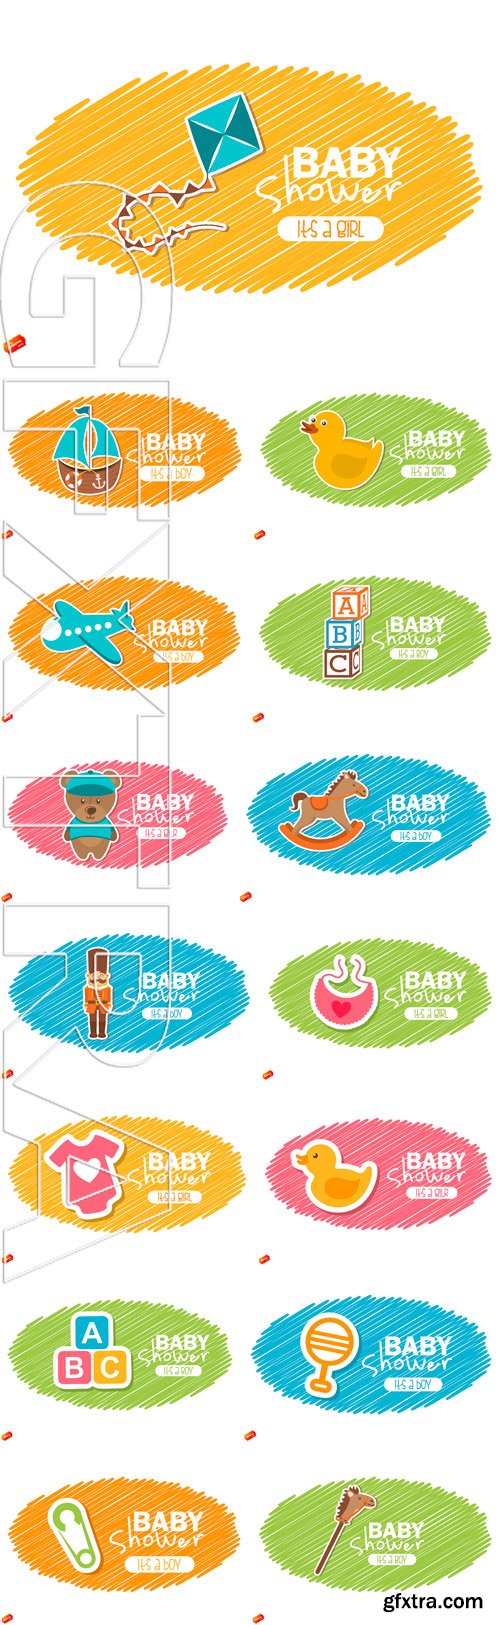 Stock Vectors -Baby shower design, vector illustration eps10 graphic